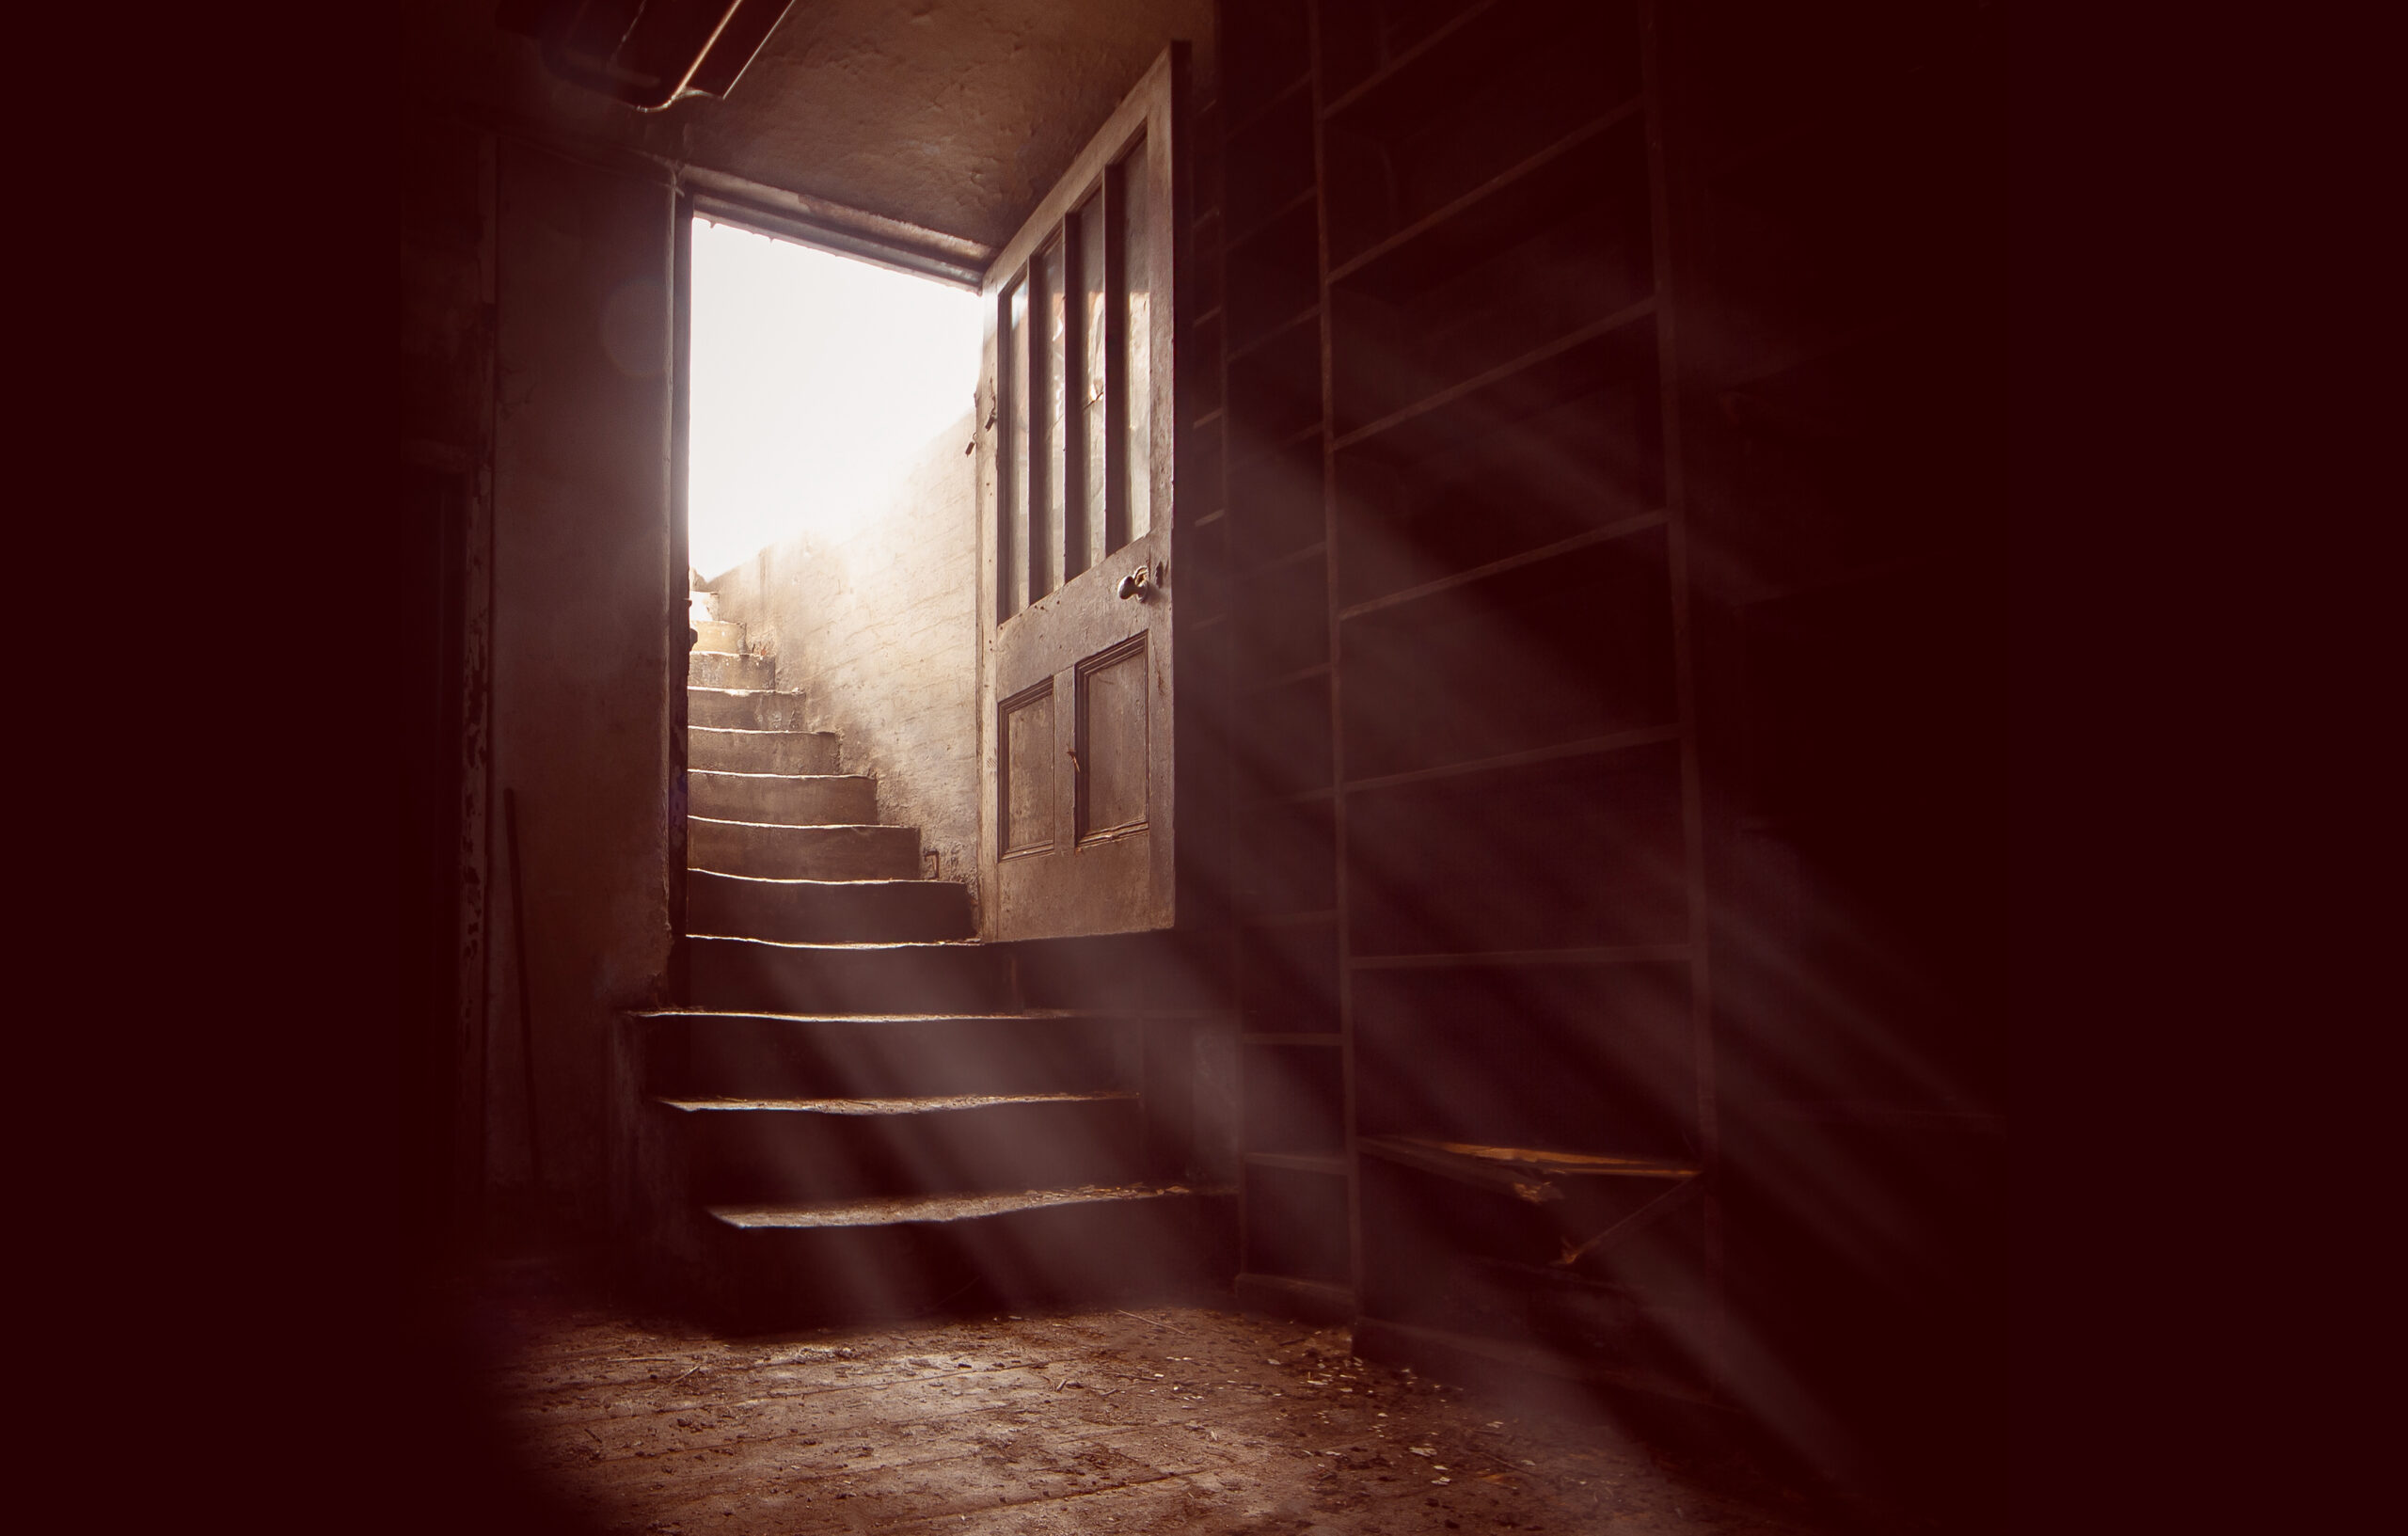 Dark wooden cellar door open at bottom of old stone stairs bright sun light rays shining in